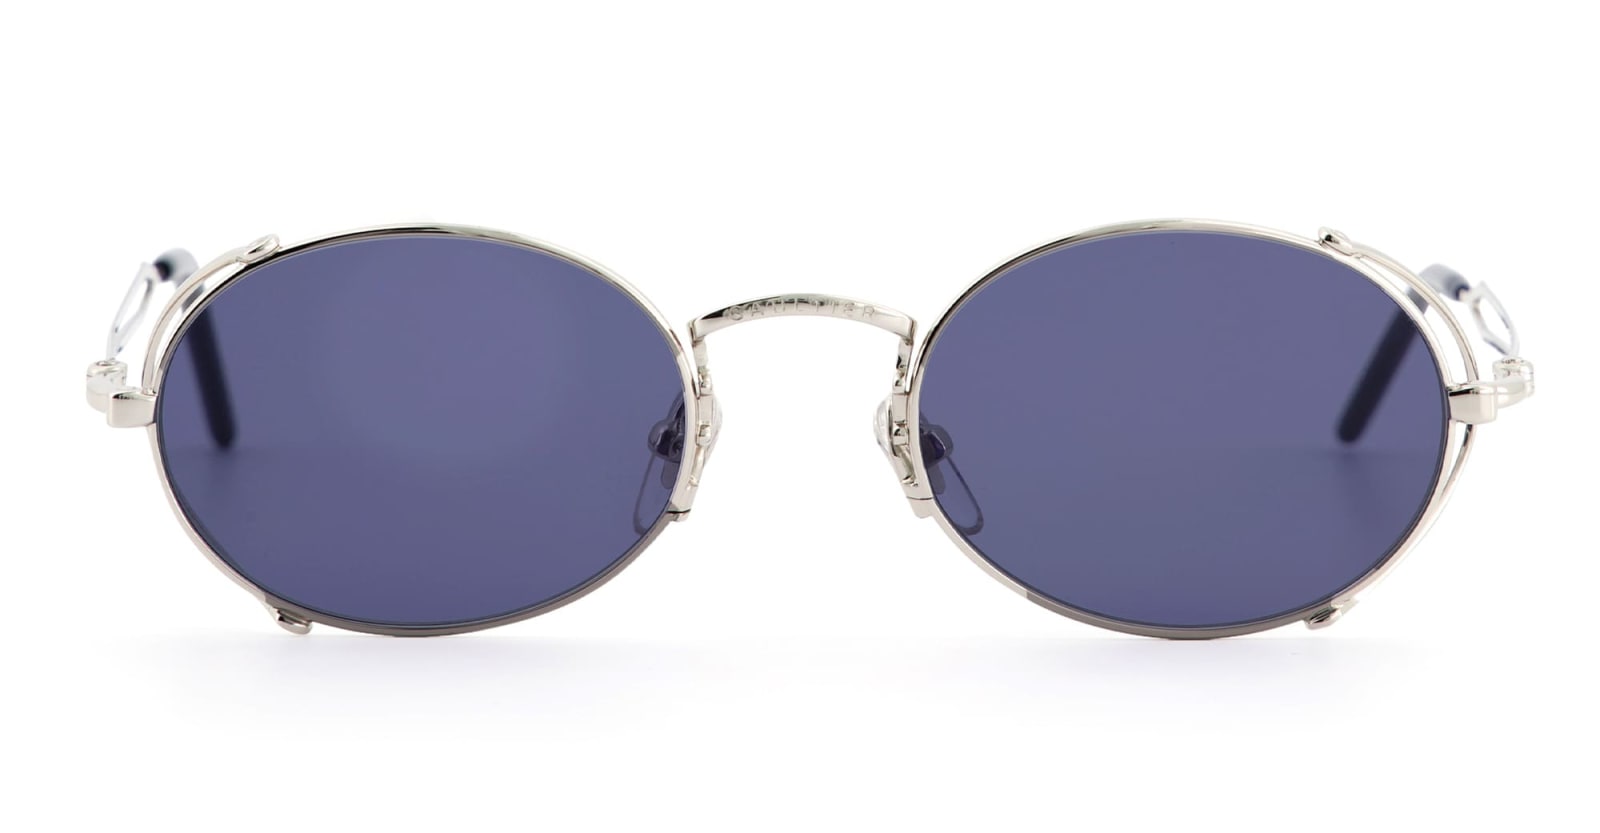 Jean Paul Gaultier 55-3175 - Arceau / Silver Sunglasses In Purple